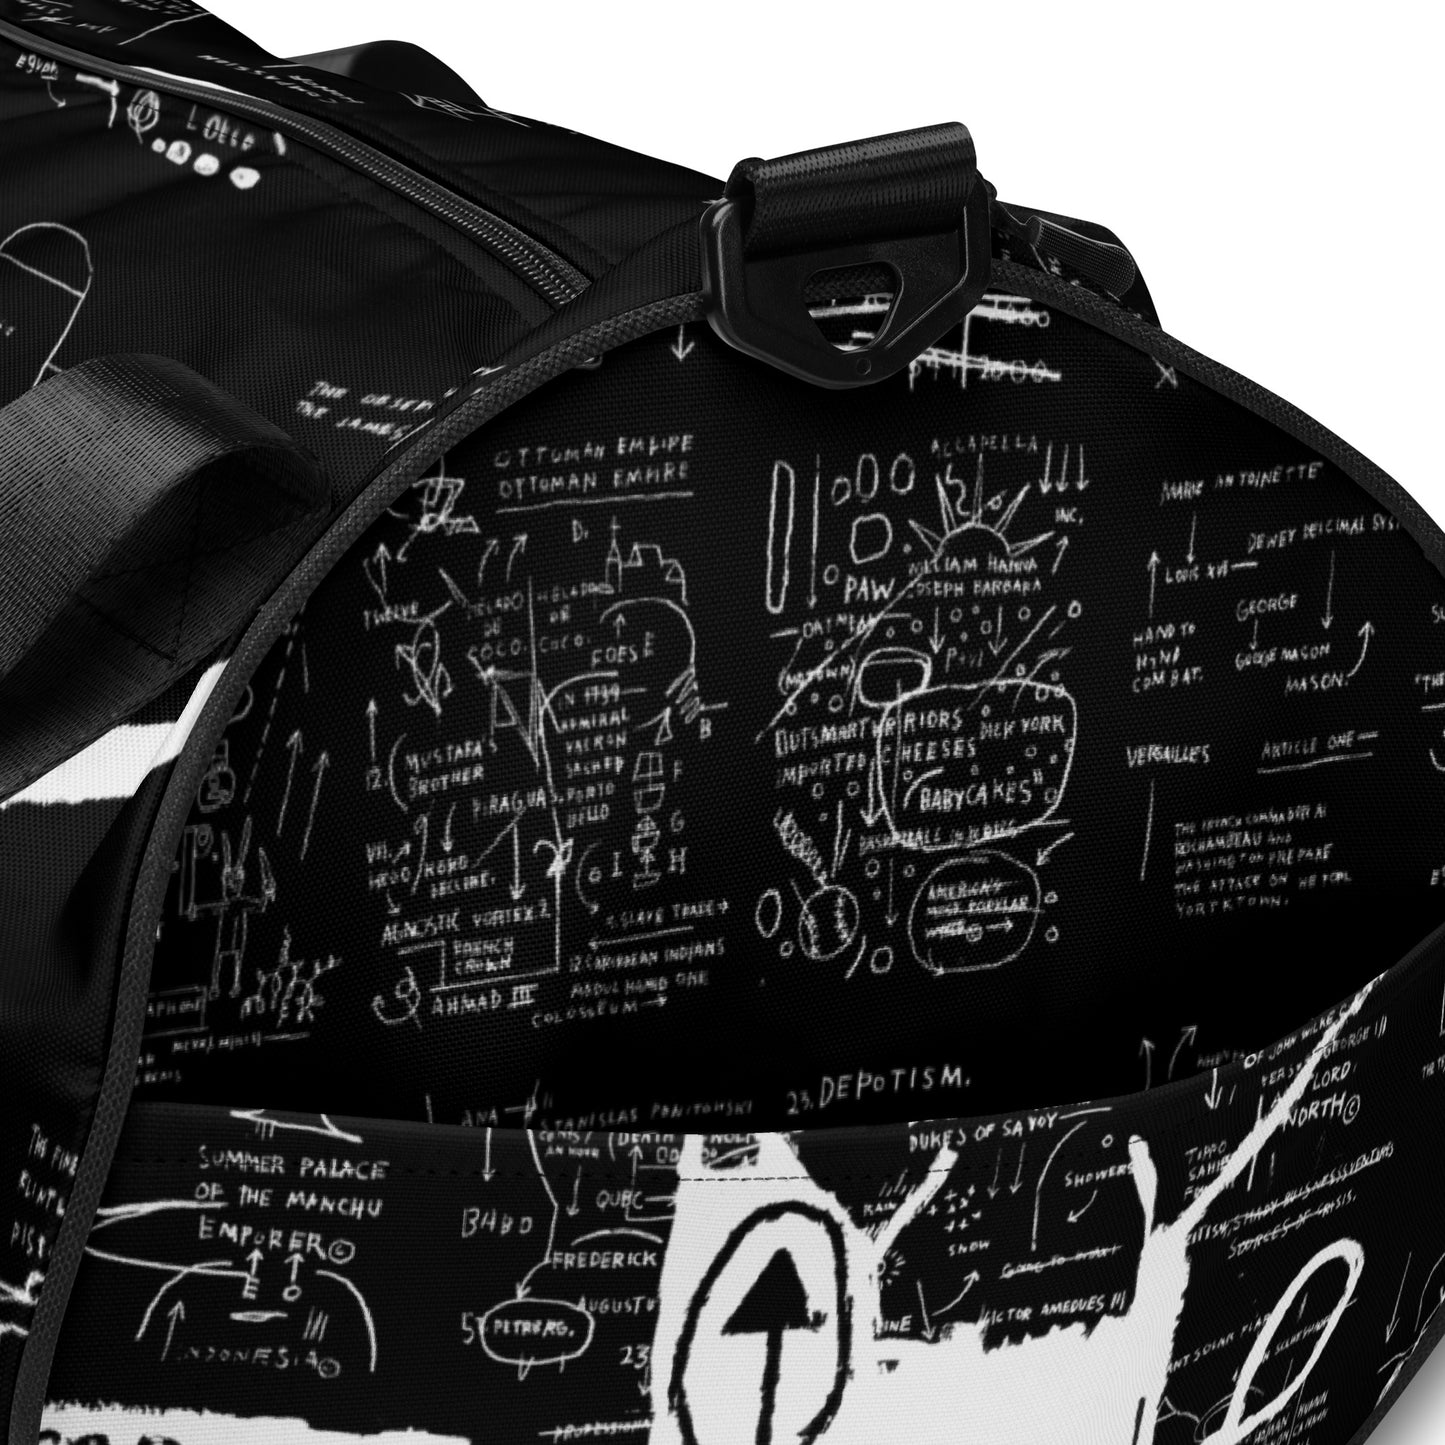 Jean-Michel Basquiat "Untitled" Artwork Gym Bag